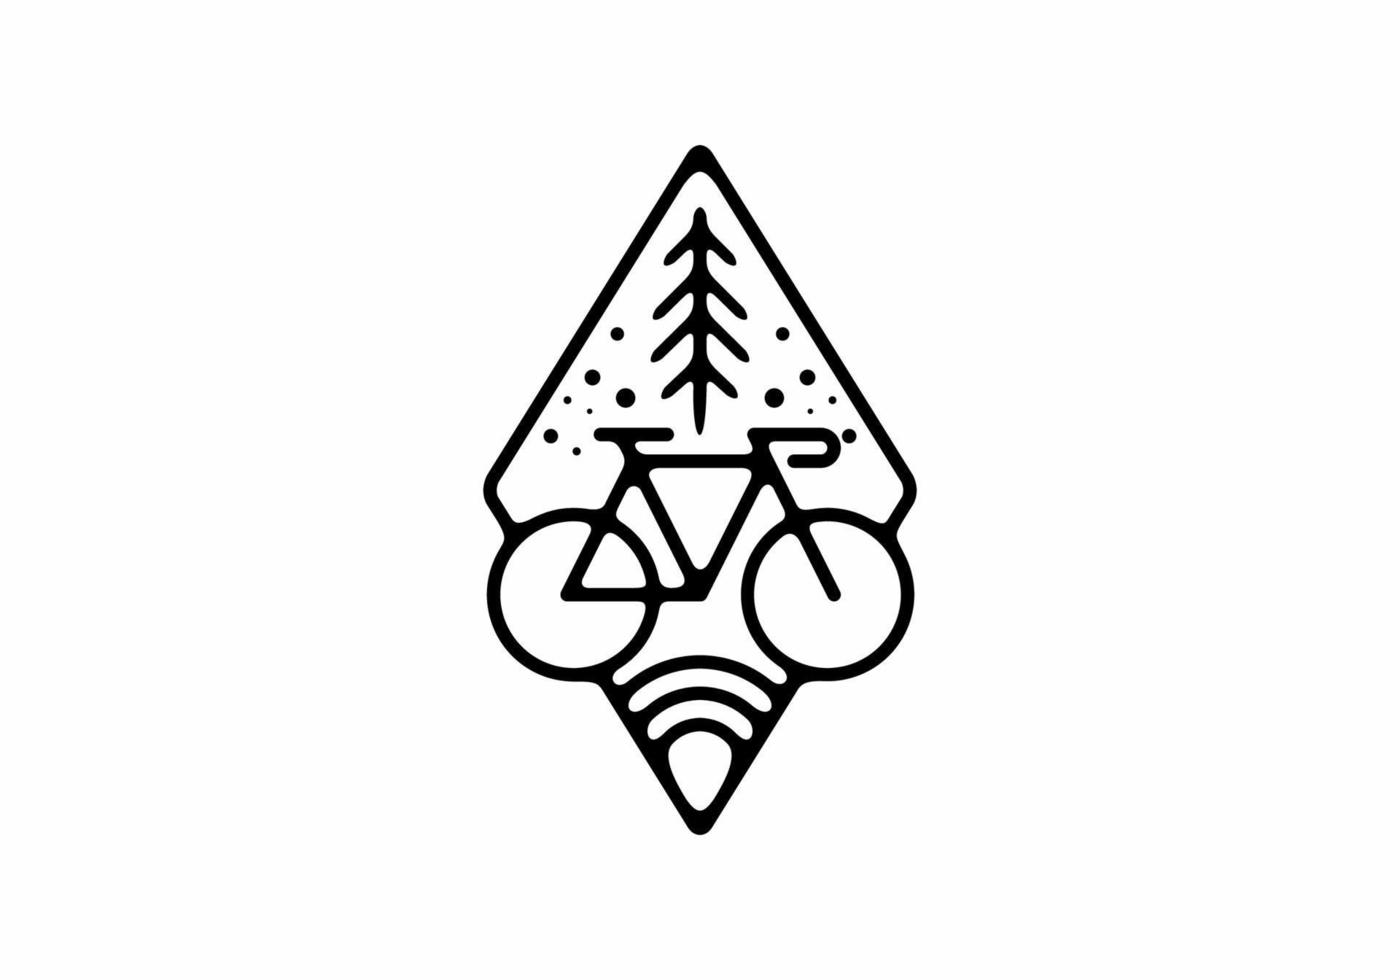 Black line art illustration of bicycle in diamond shape vector